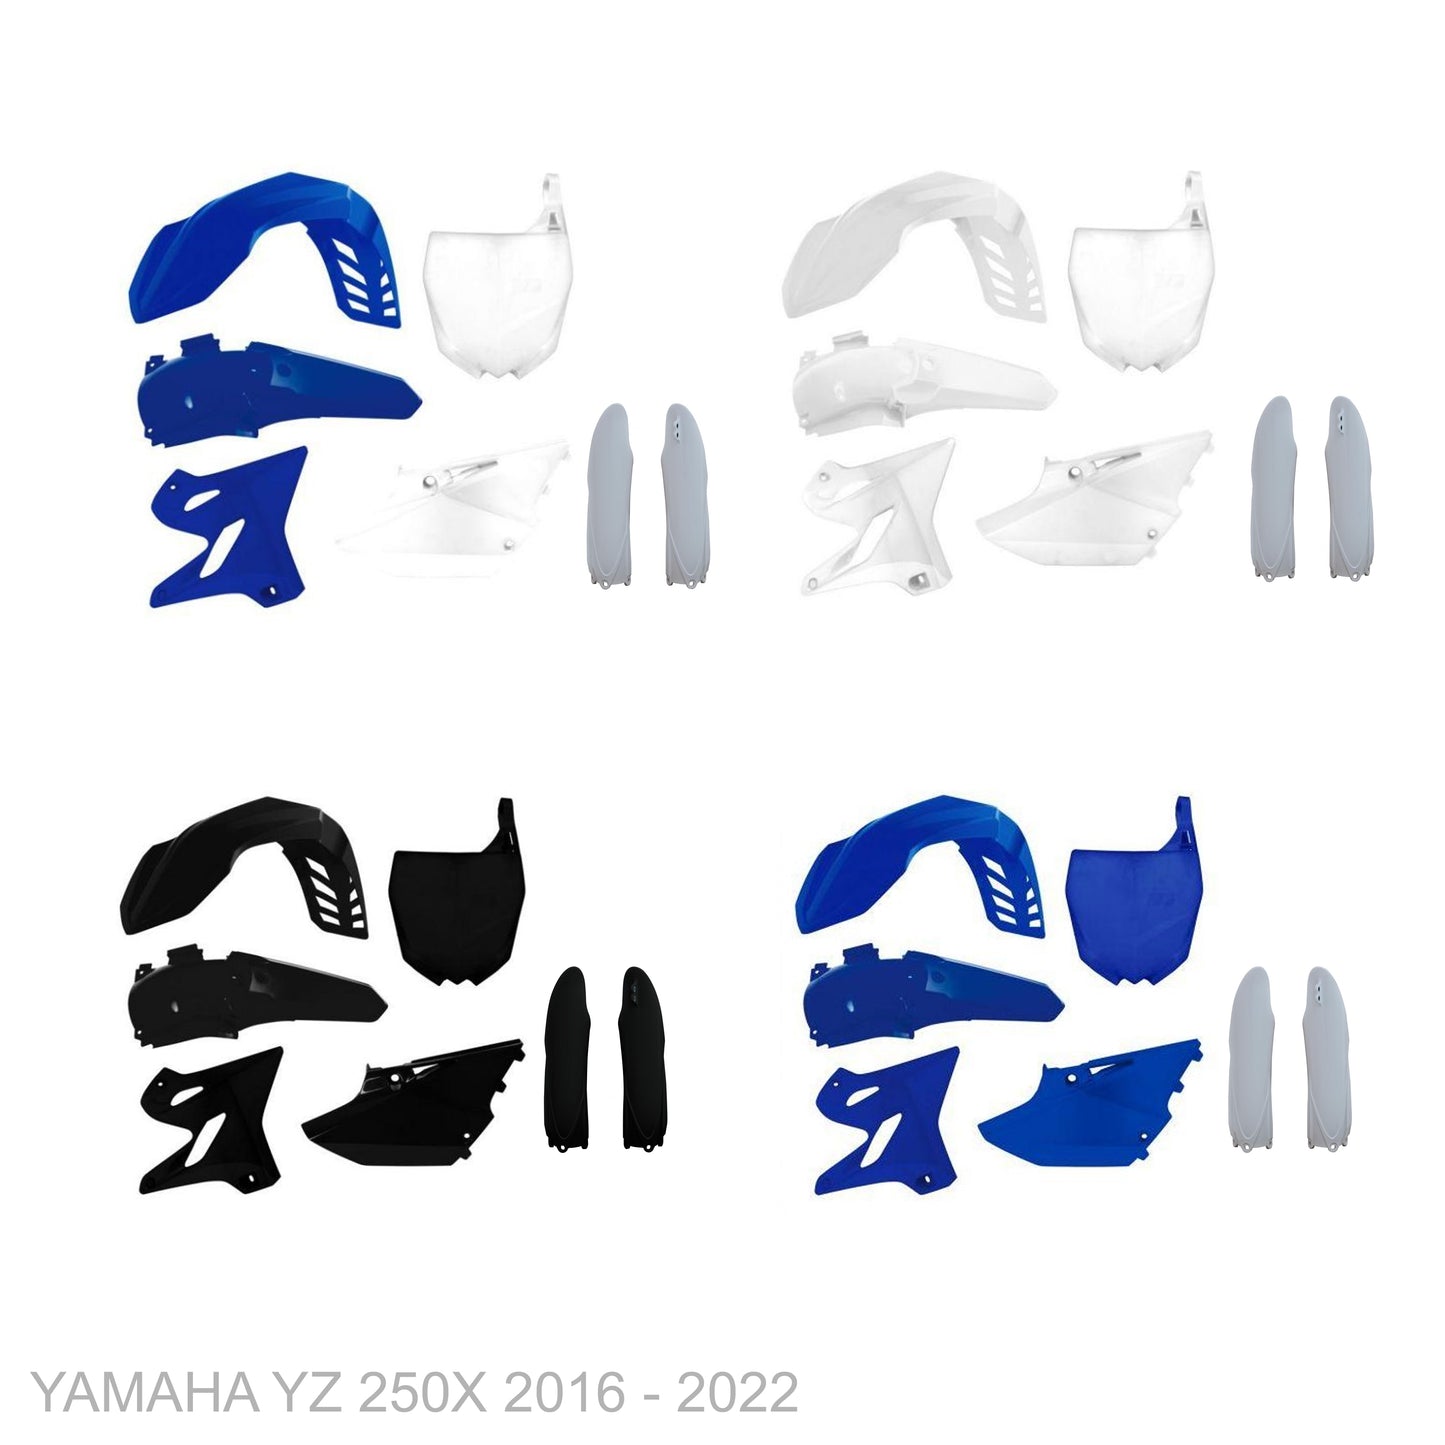 YAMAHA YZ 250X 2016 - 2022 FIR Team Graphics Kit